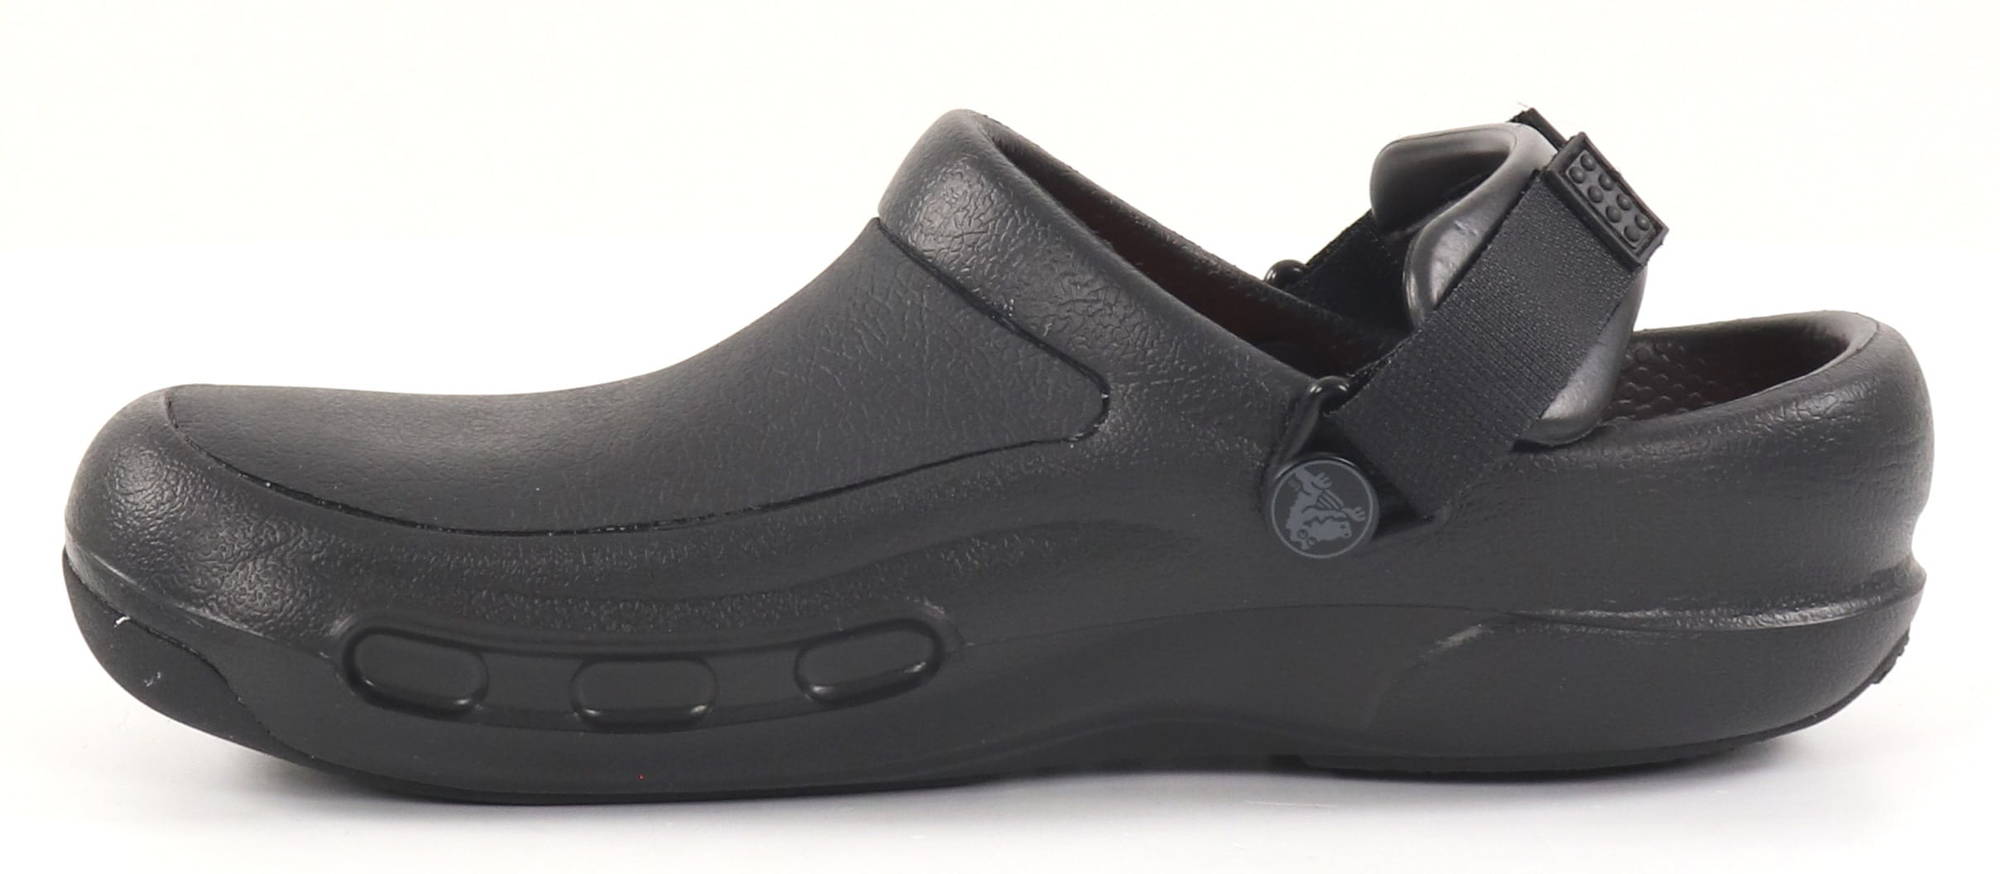 Crocs Bistro Pro LiteRide Clog black - Stilettoshop.eu webstore